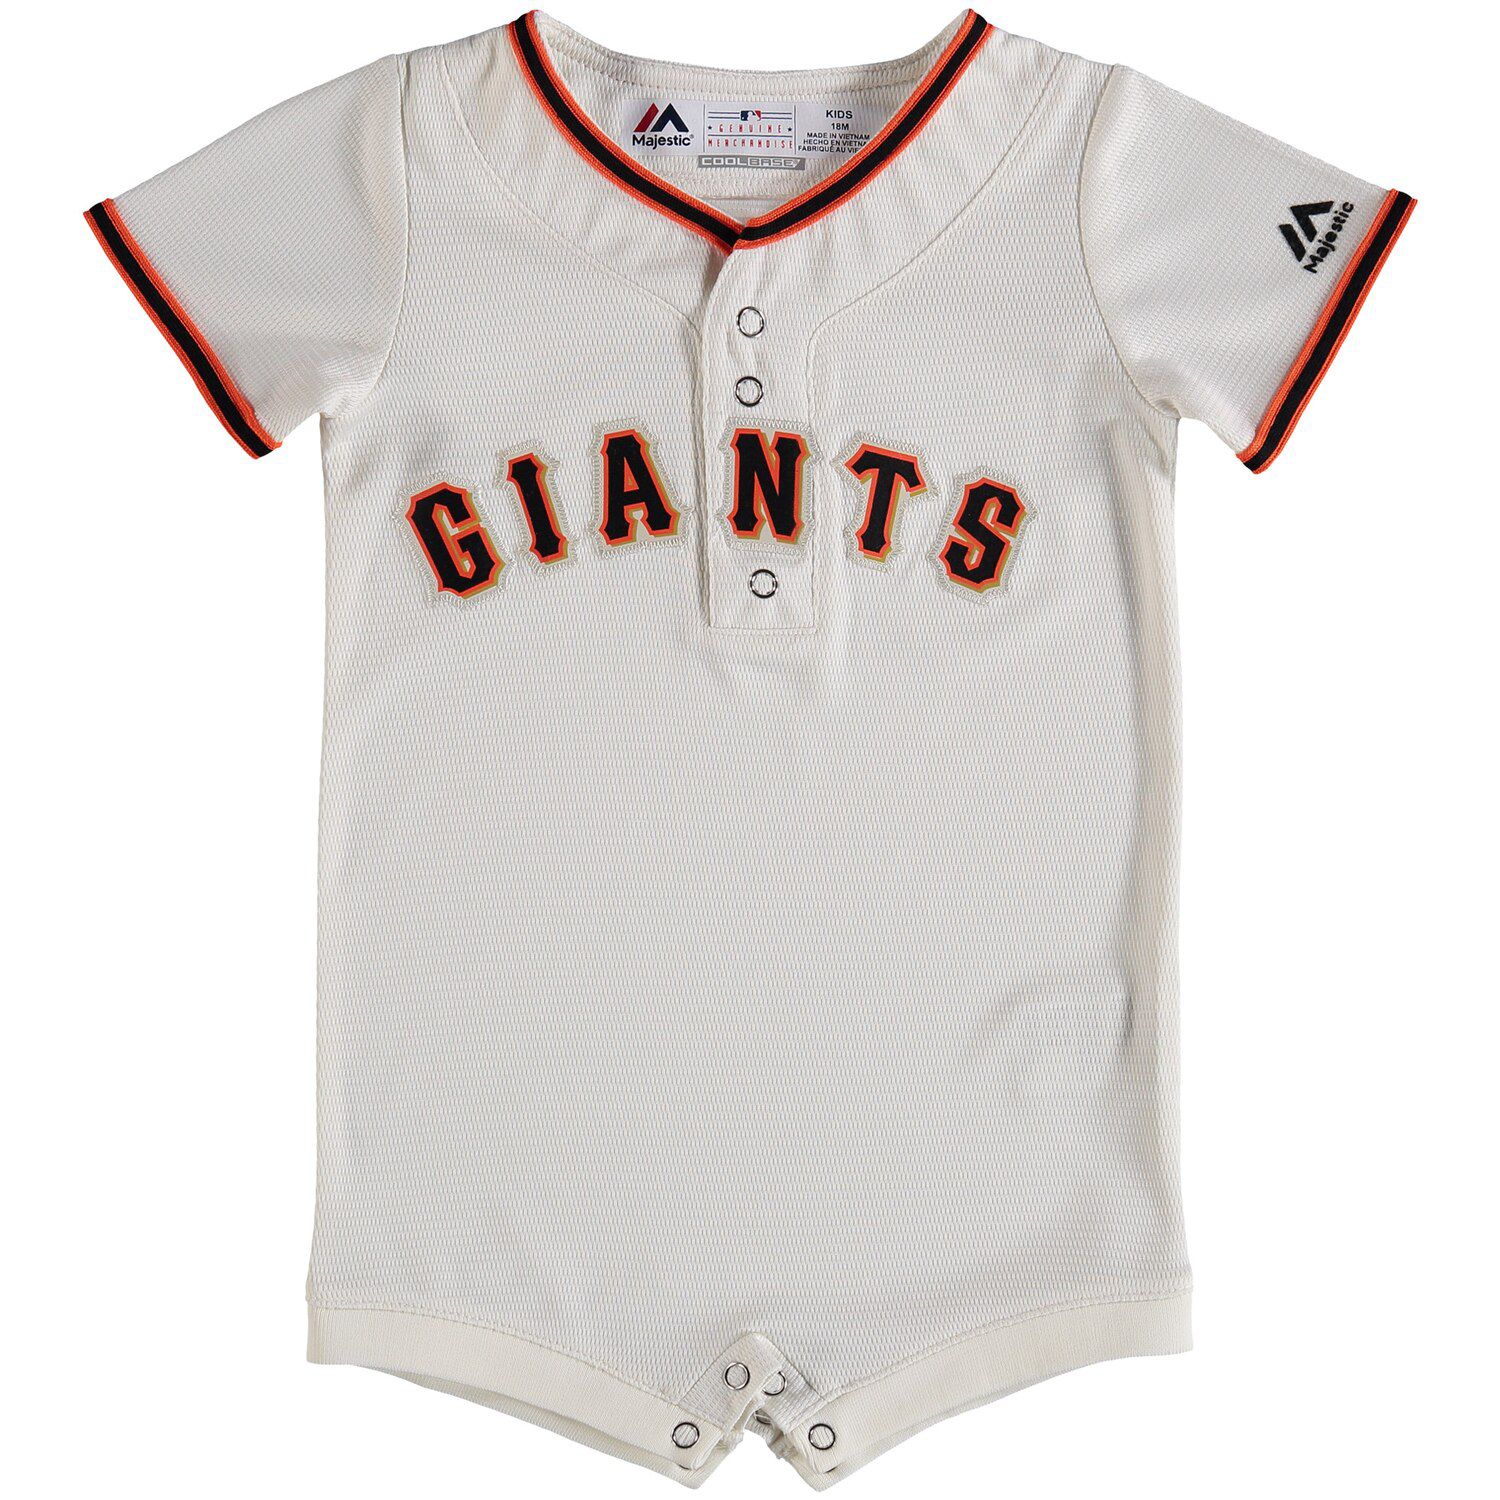 newborn giants jersey